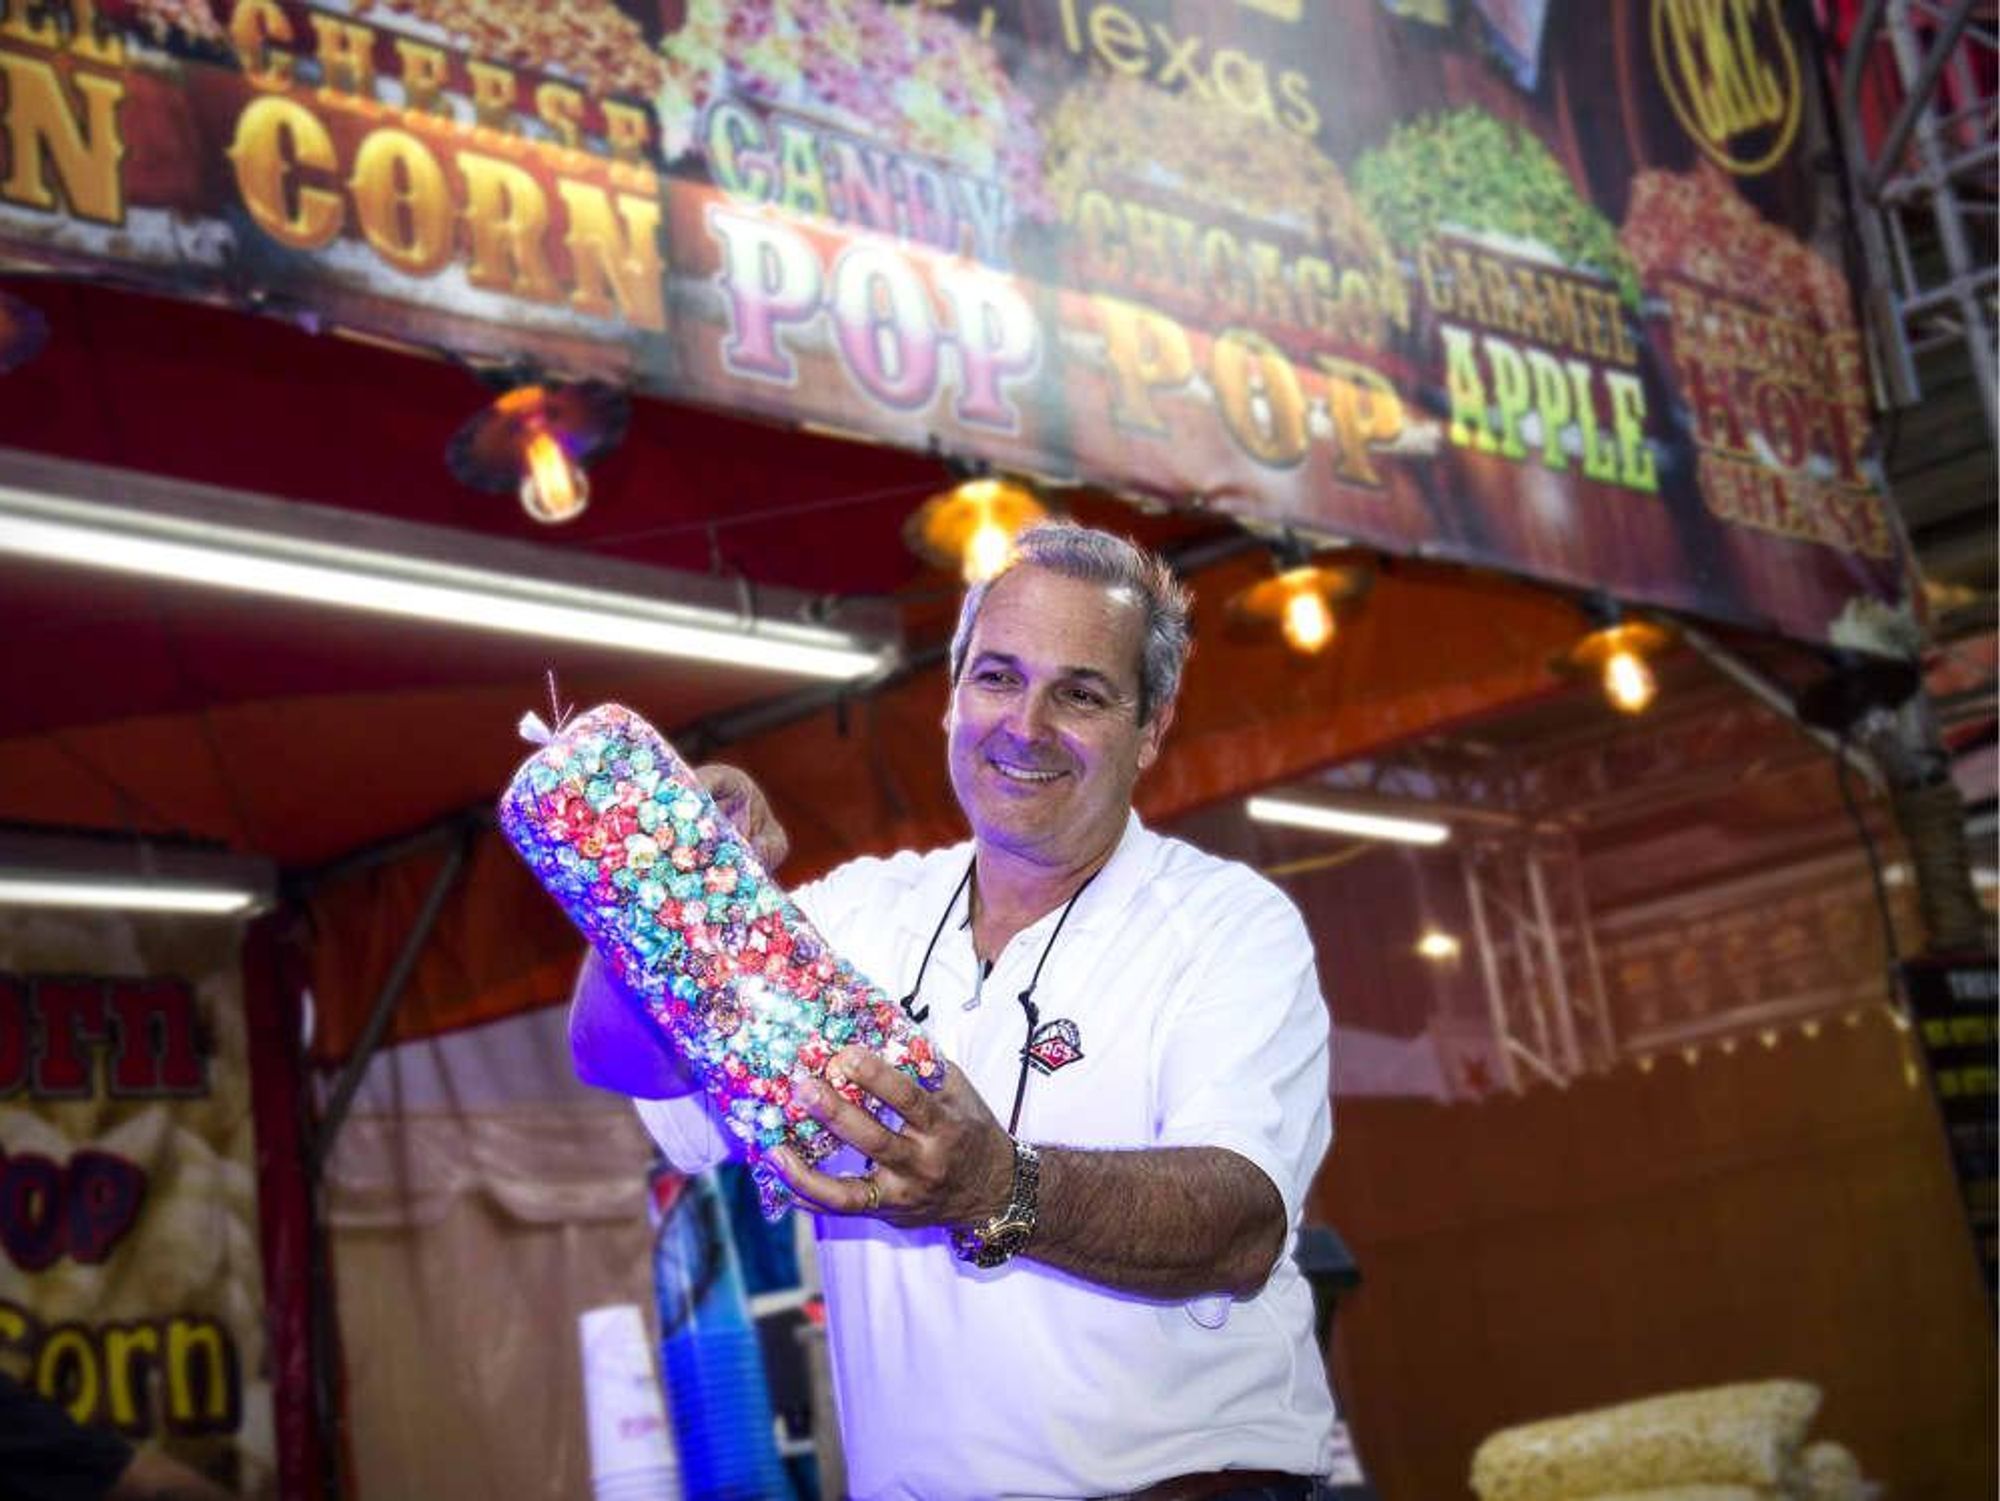 Rodeo Carnival Dominic Palmieri popcorn